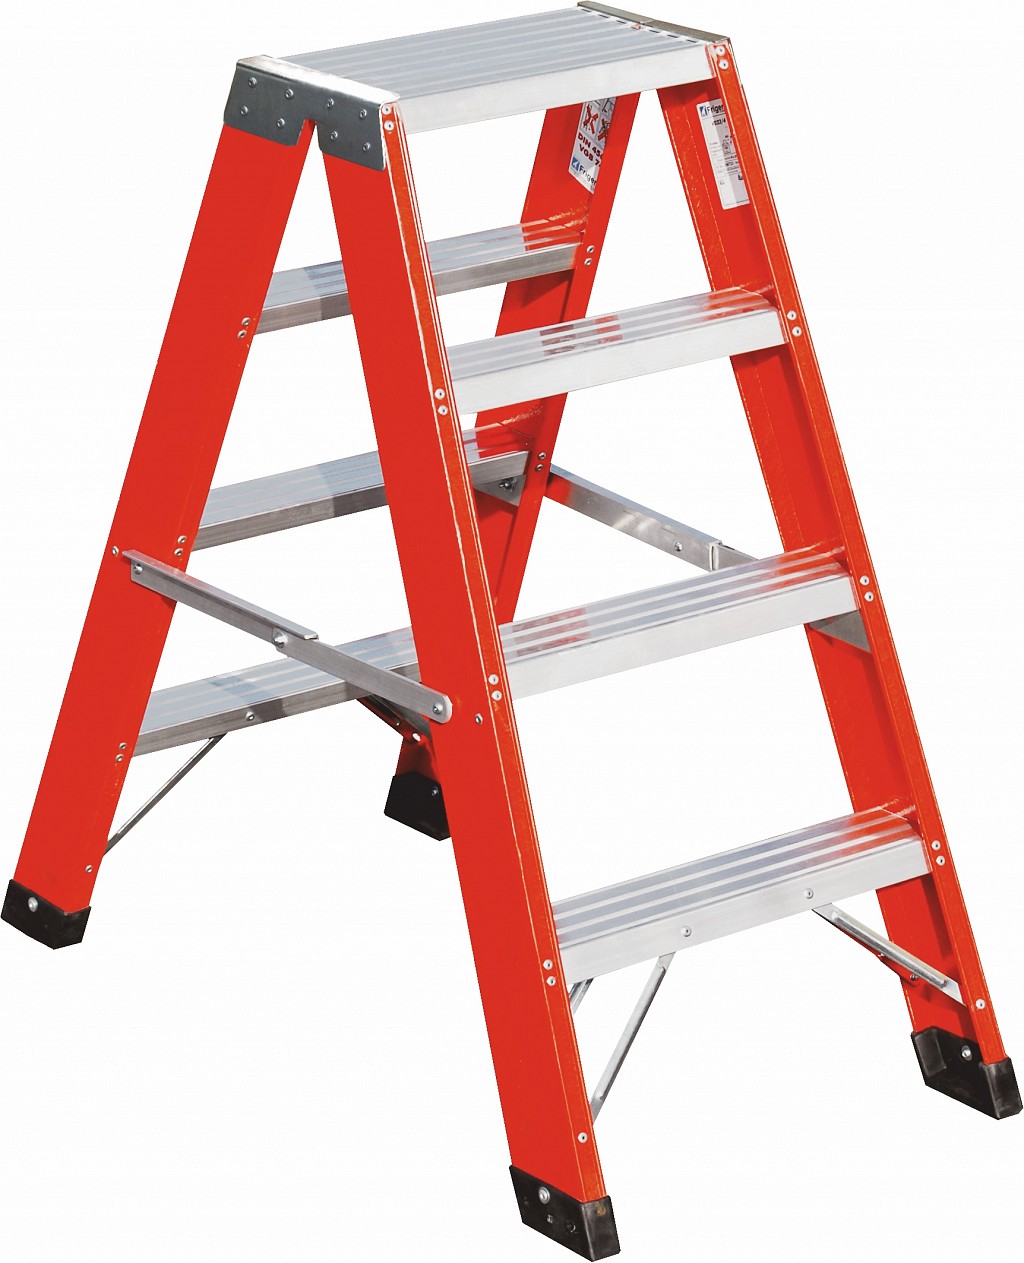 Two-sided ladder V033